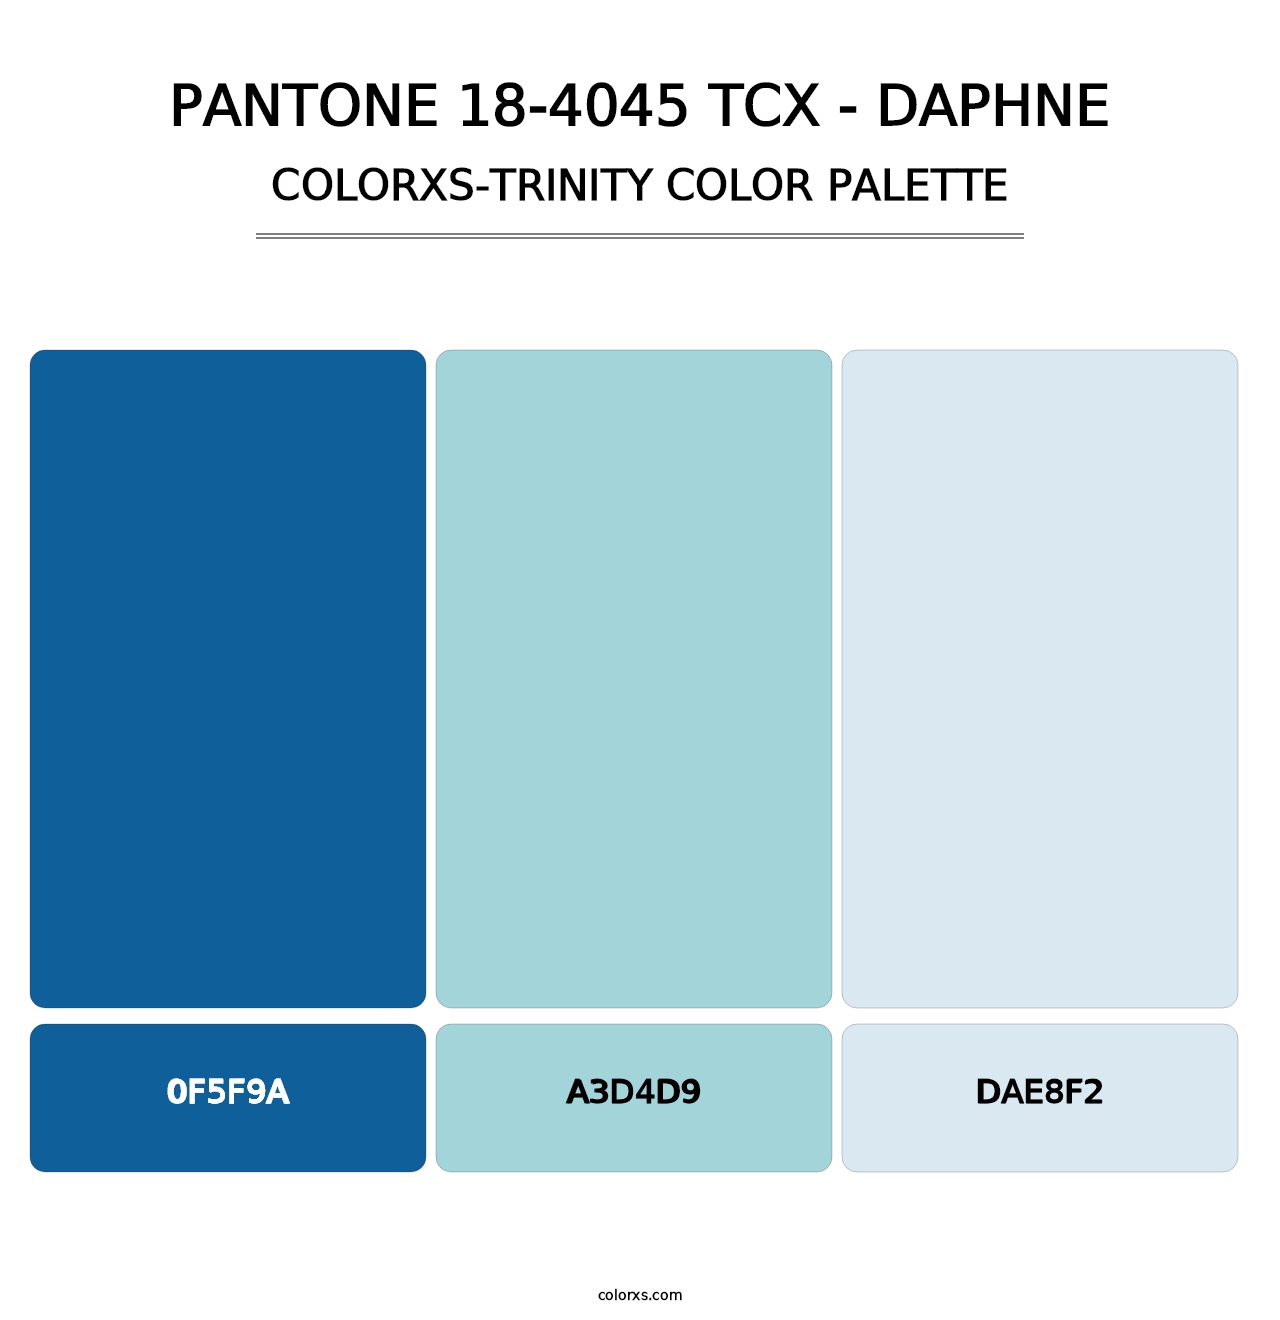 PANTONE 18-4045 TCX - Daphne - Colorxs Trinity Palette